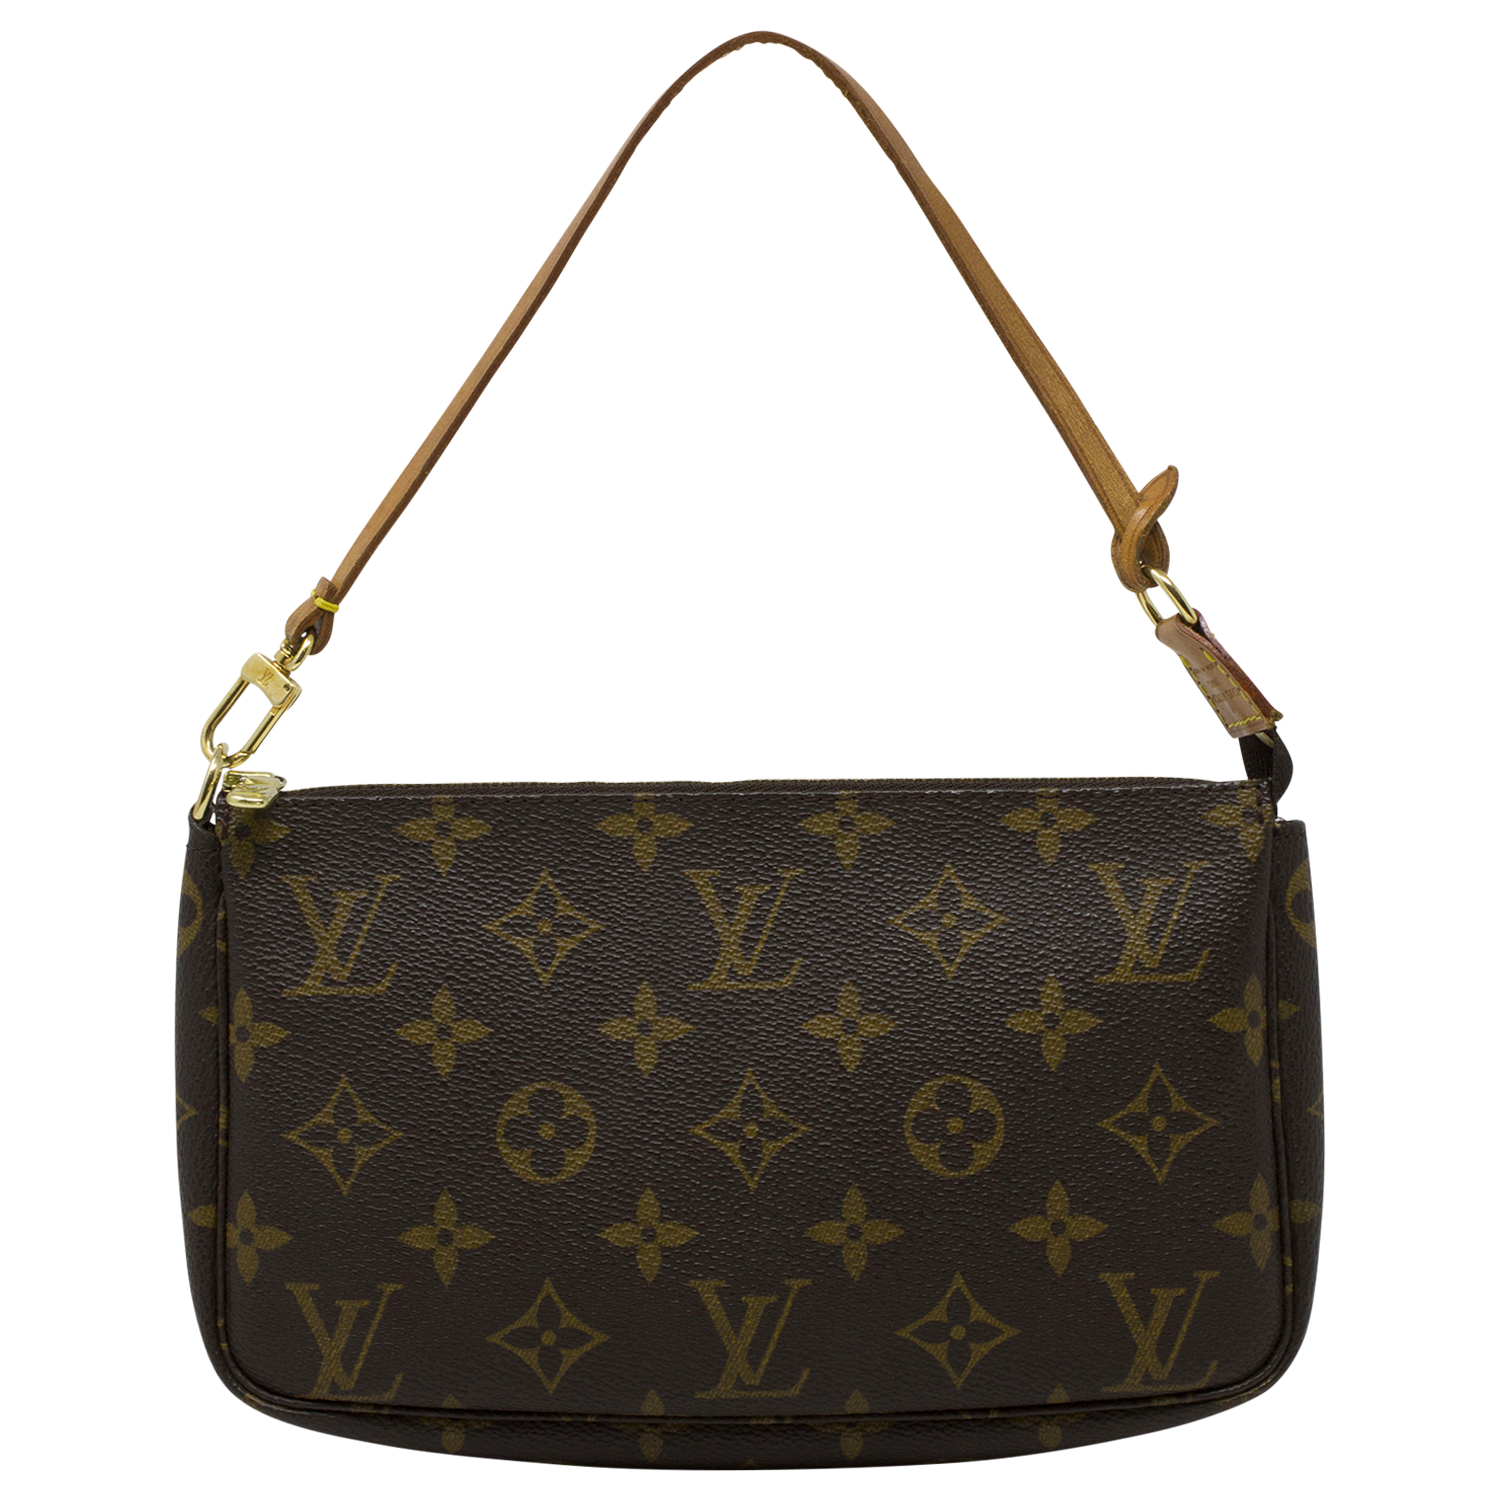 New Vuitton Limited Edition Mini Pouchette Giraffe Bag